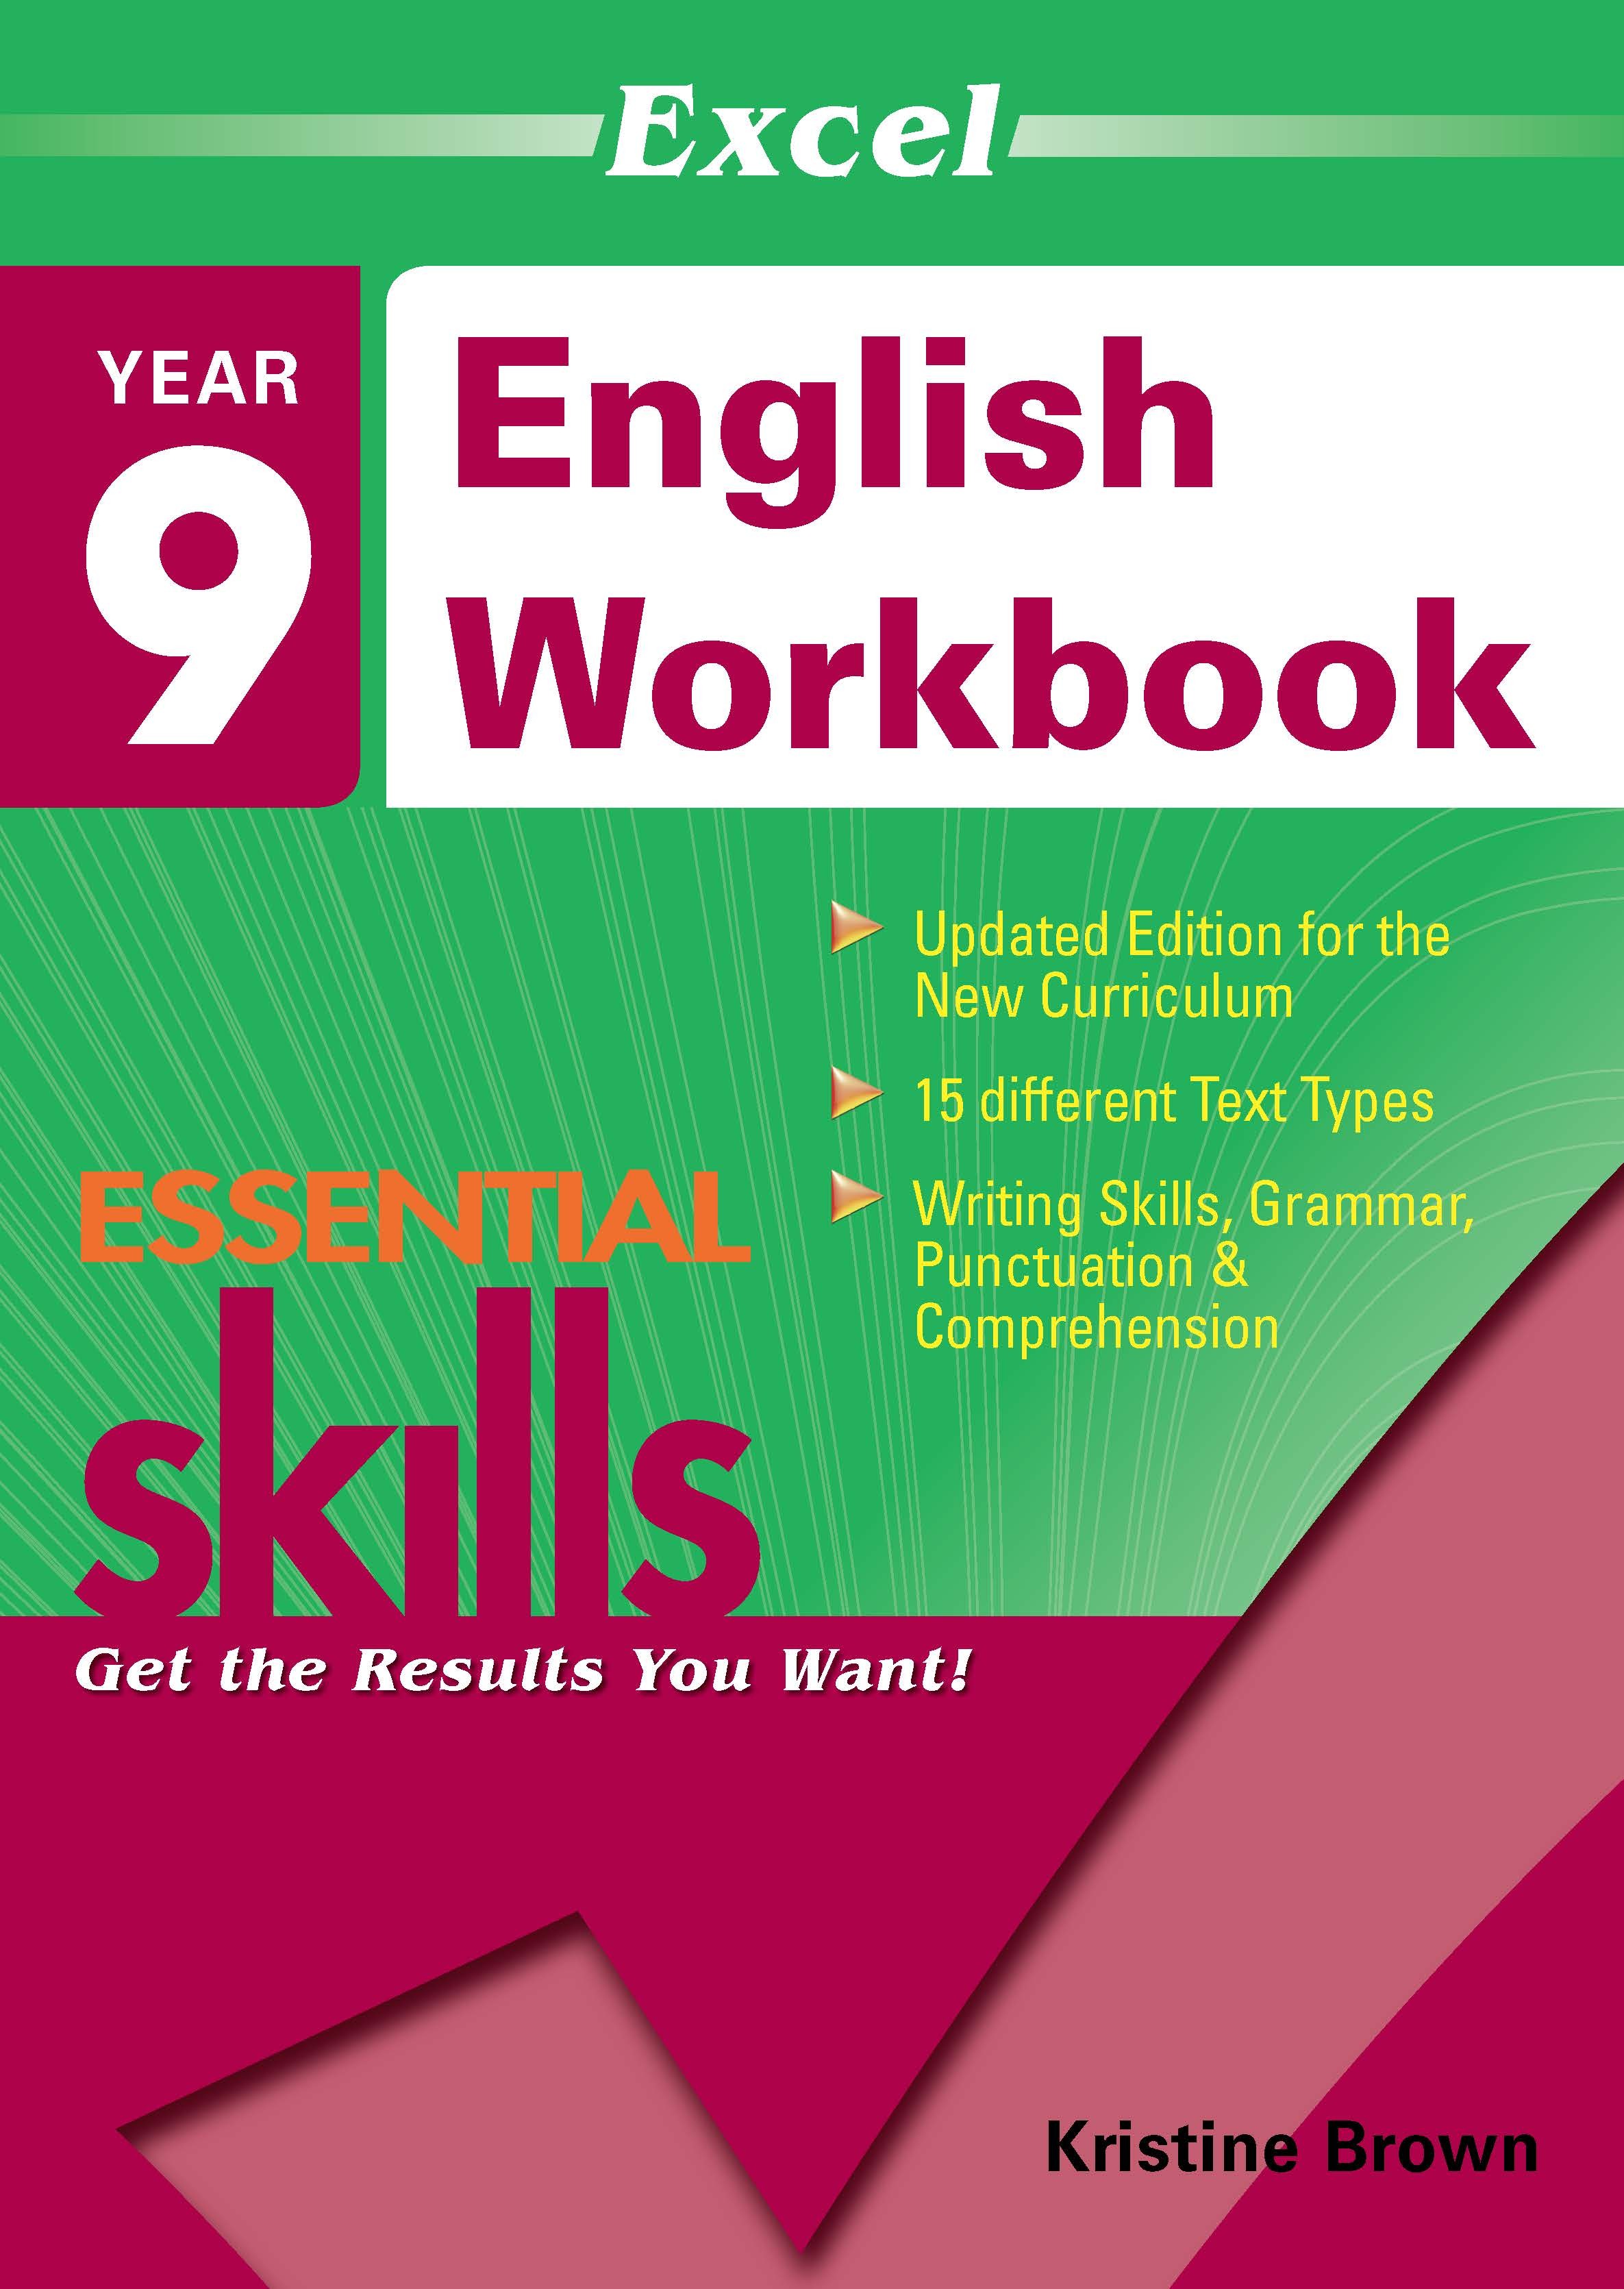 pascal-press-excel-essential-skills-english-workbook-year-9-the-school-locker